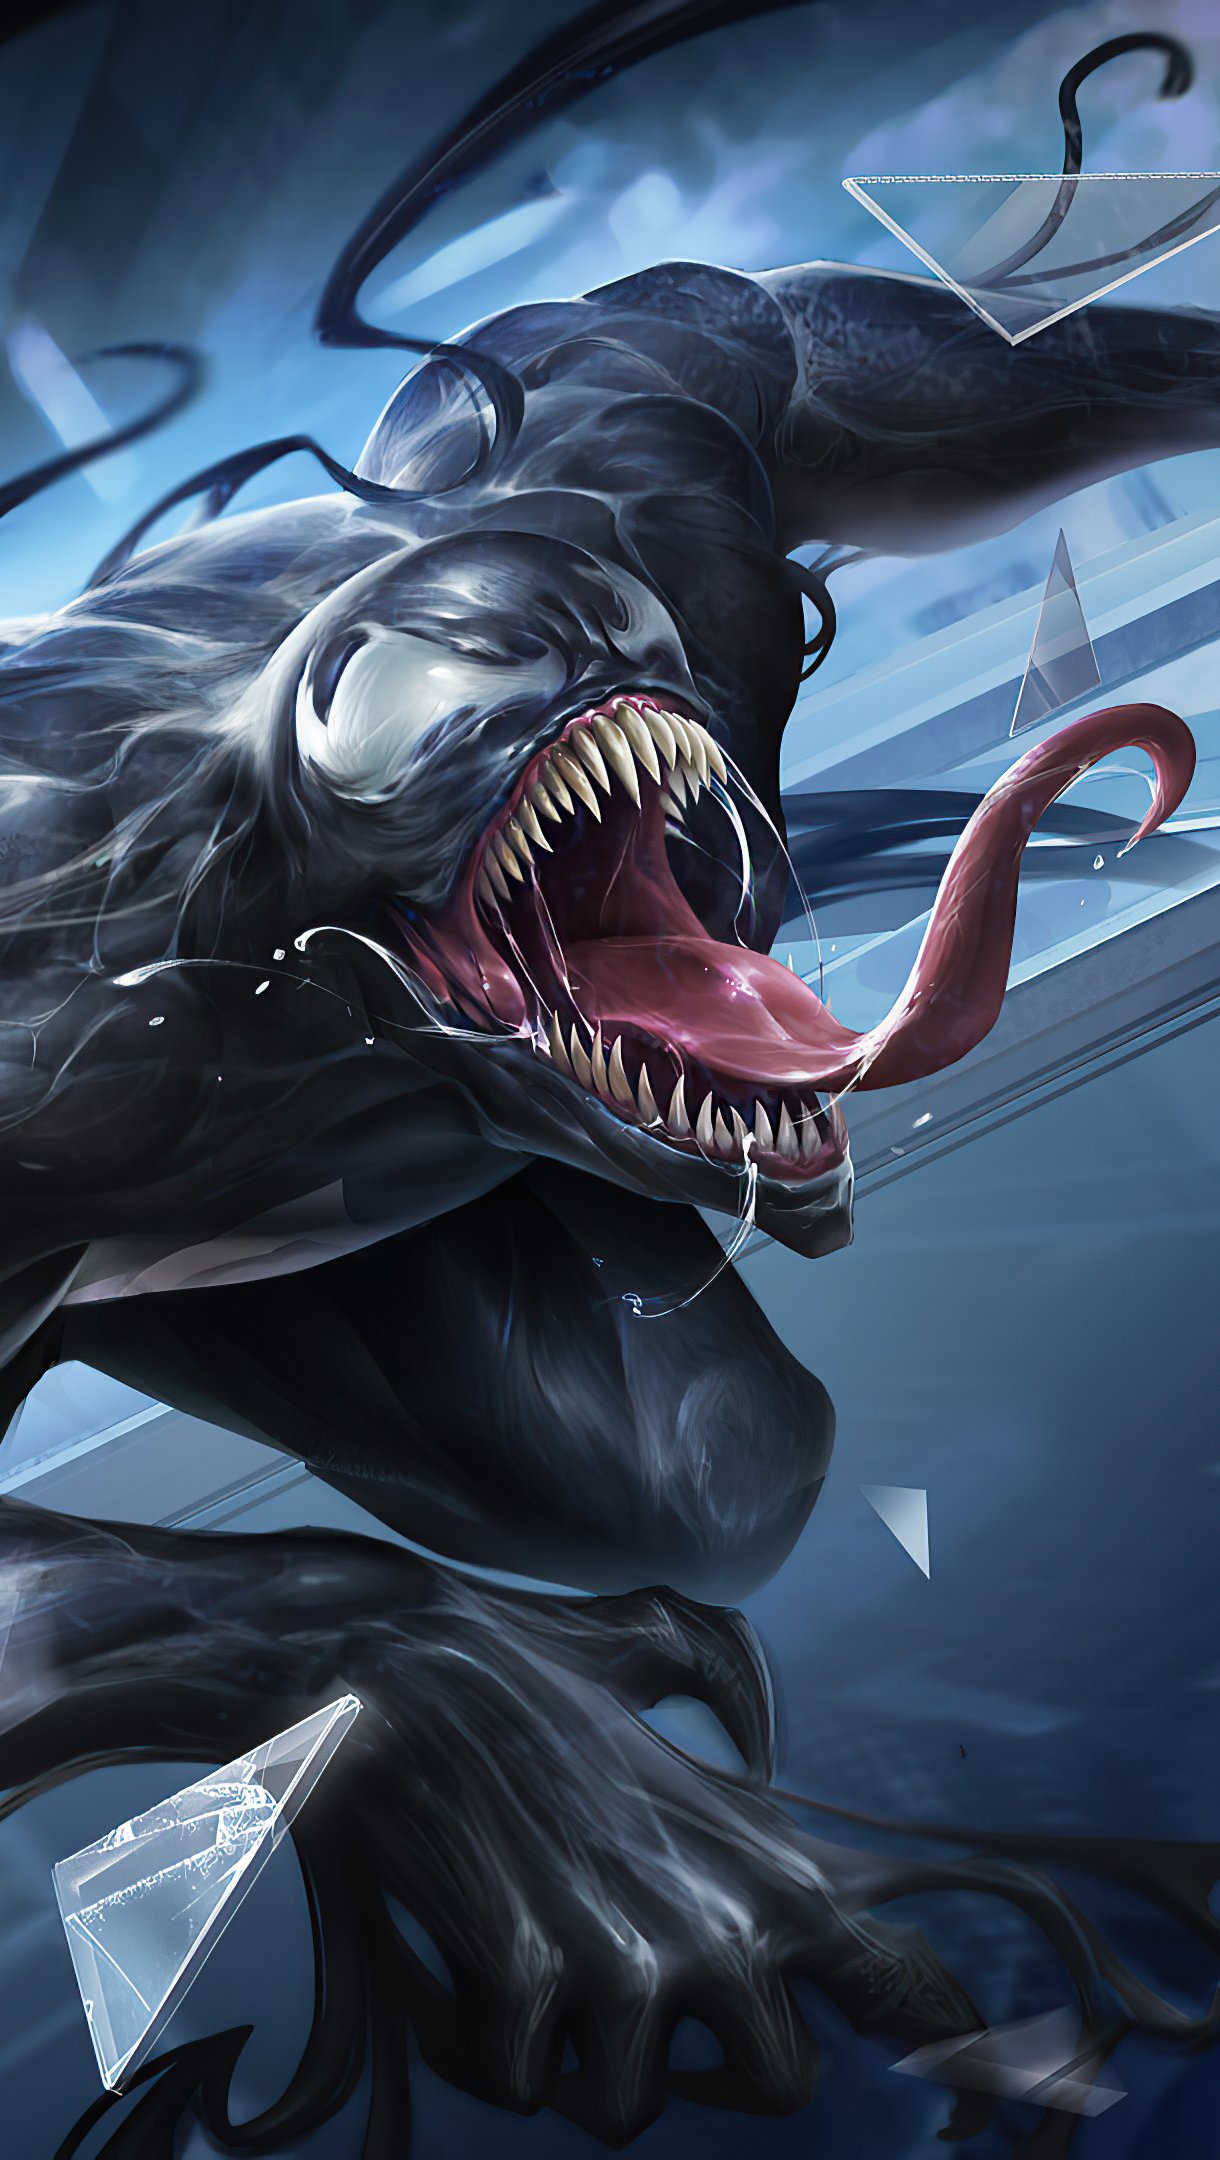 Venom 4K 2020 Wallpapers